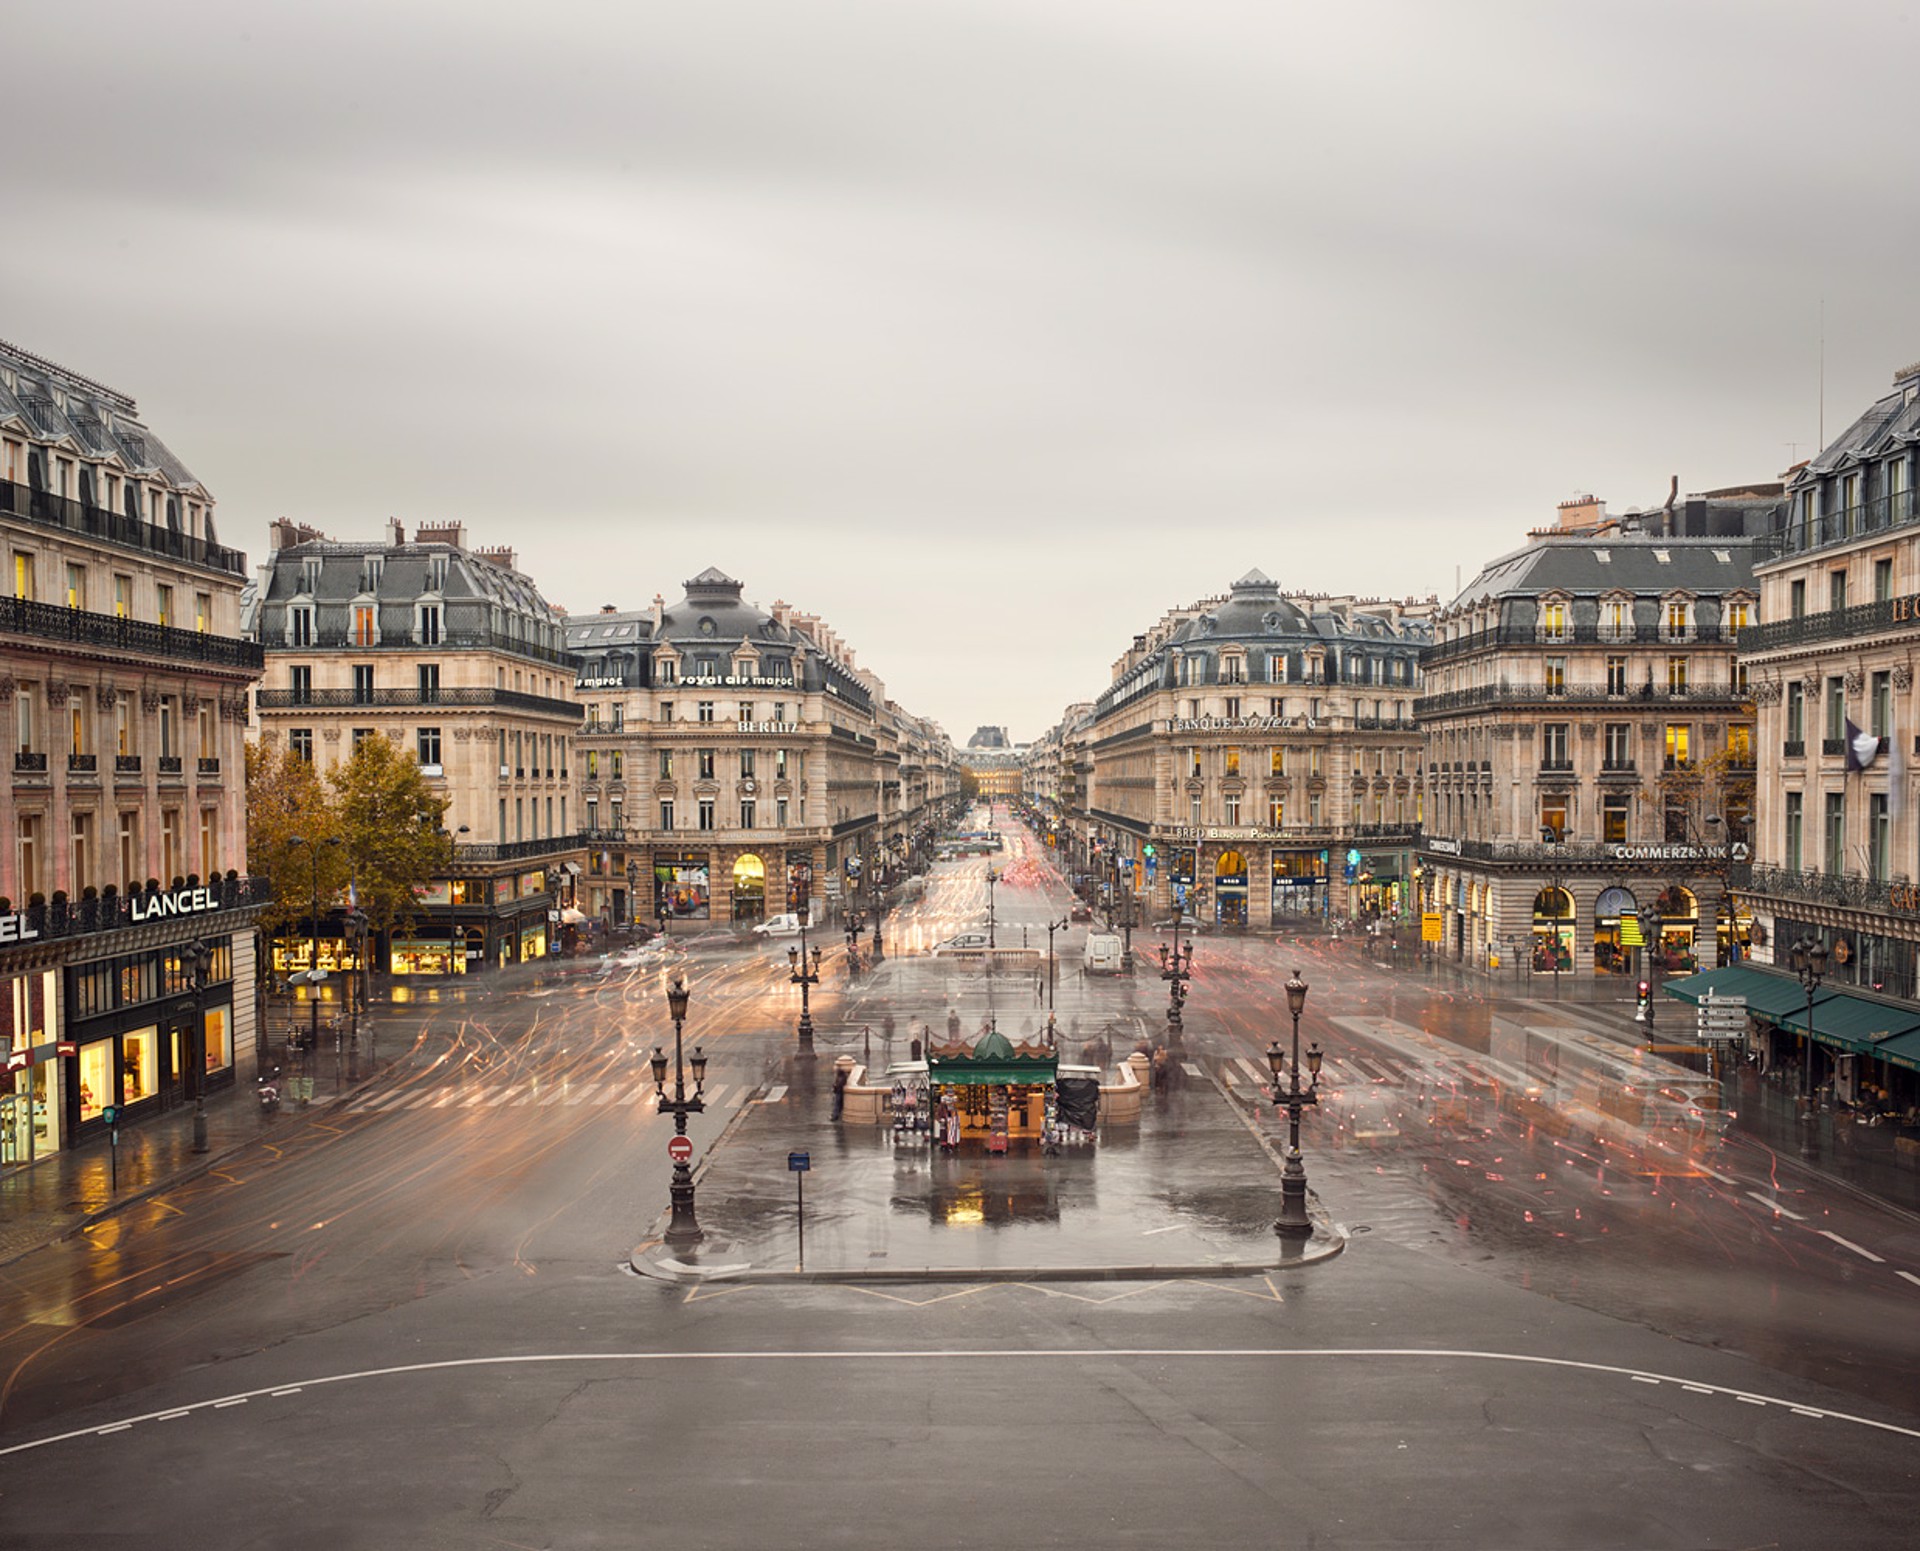 Place de Opera Paris, France, by David Burdeny